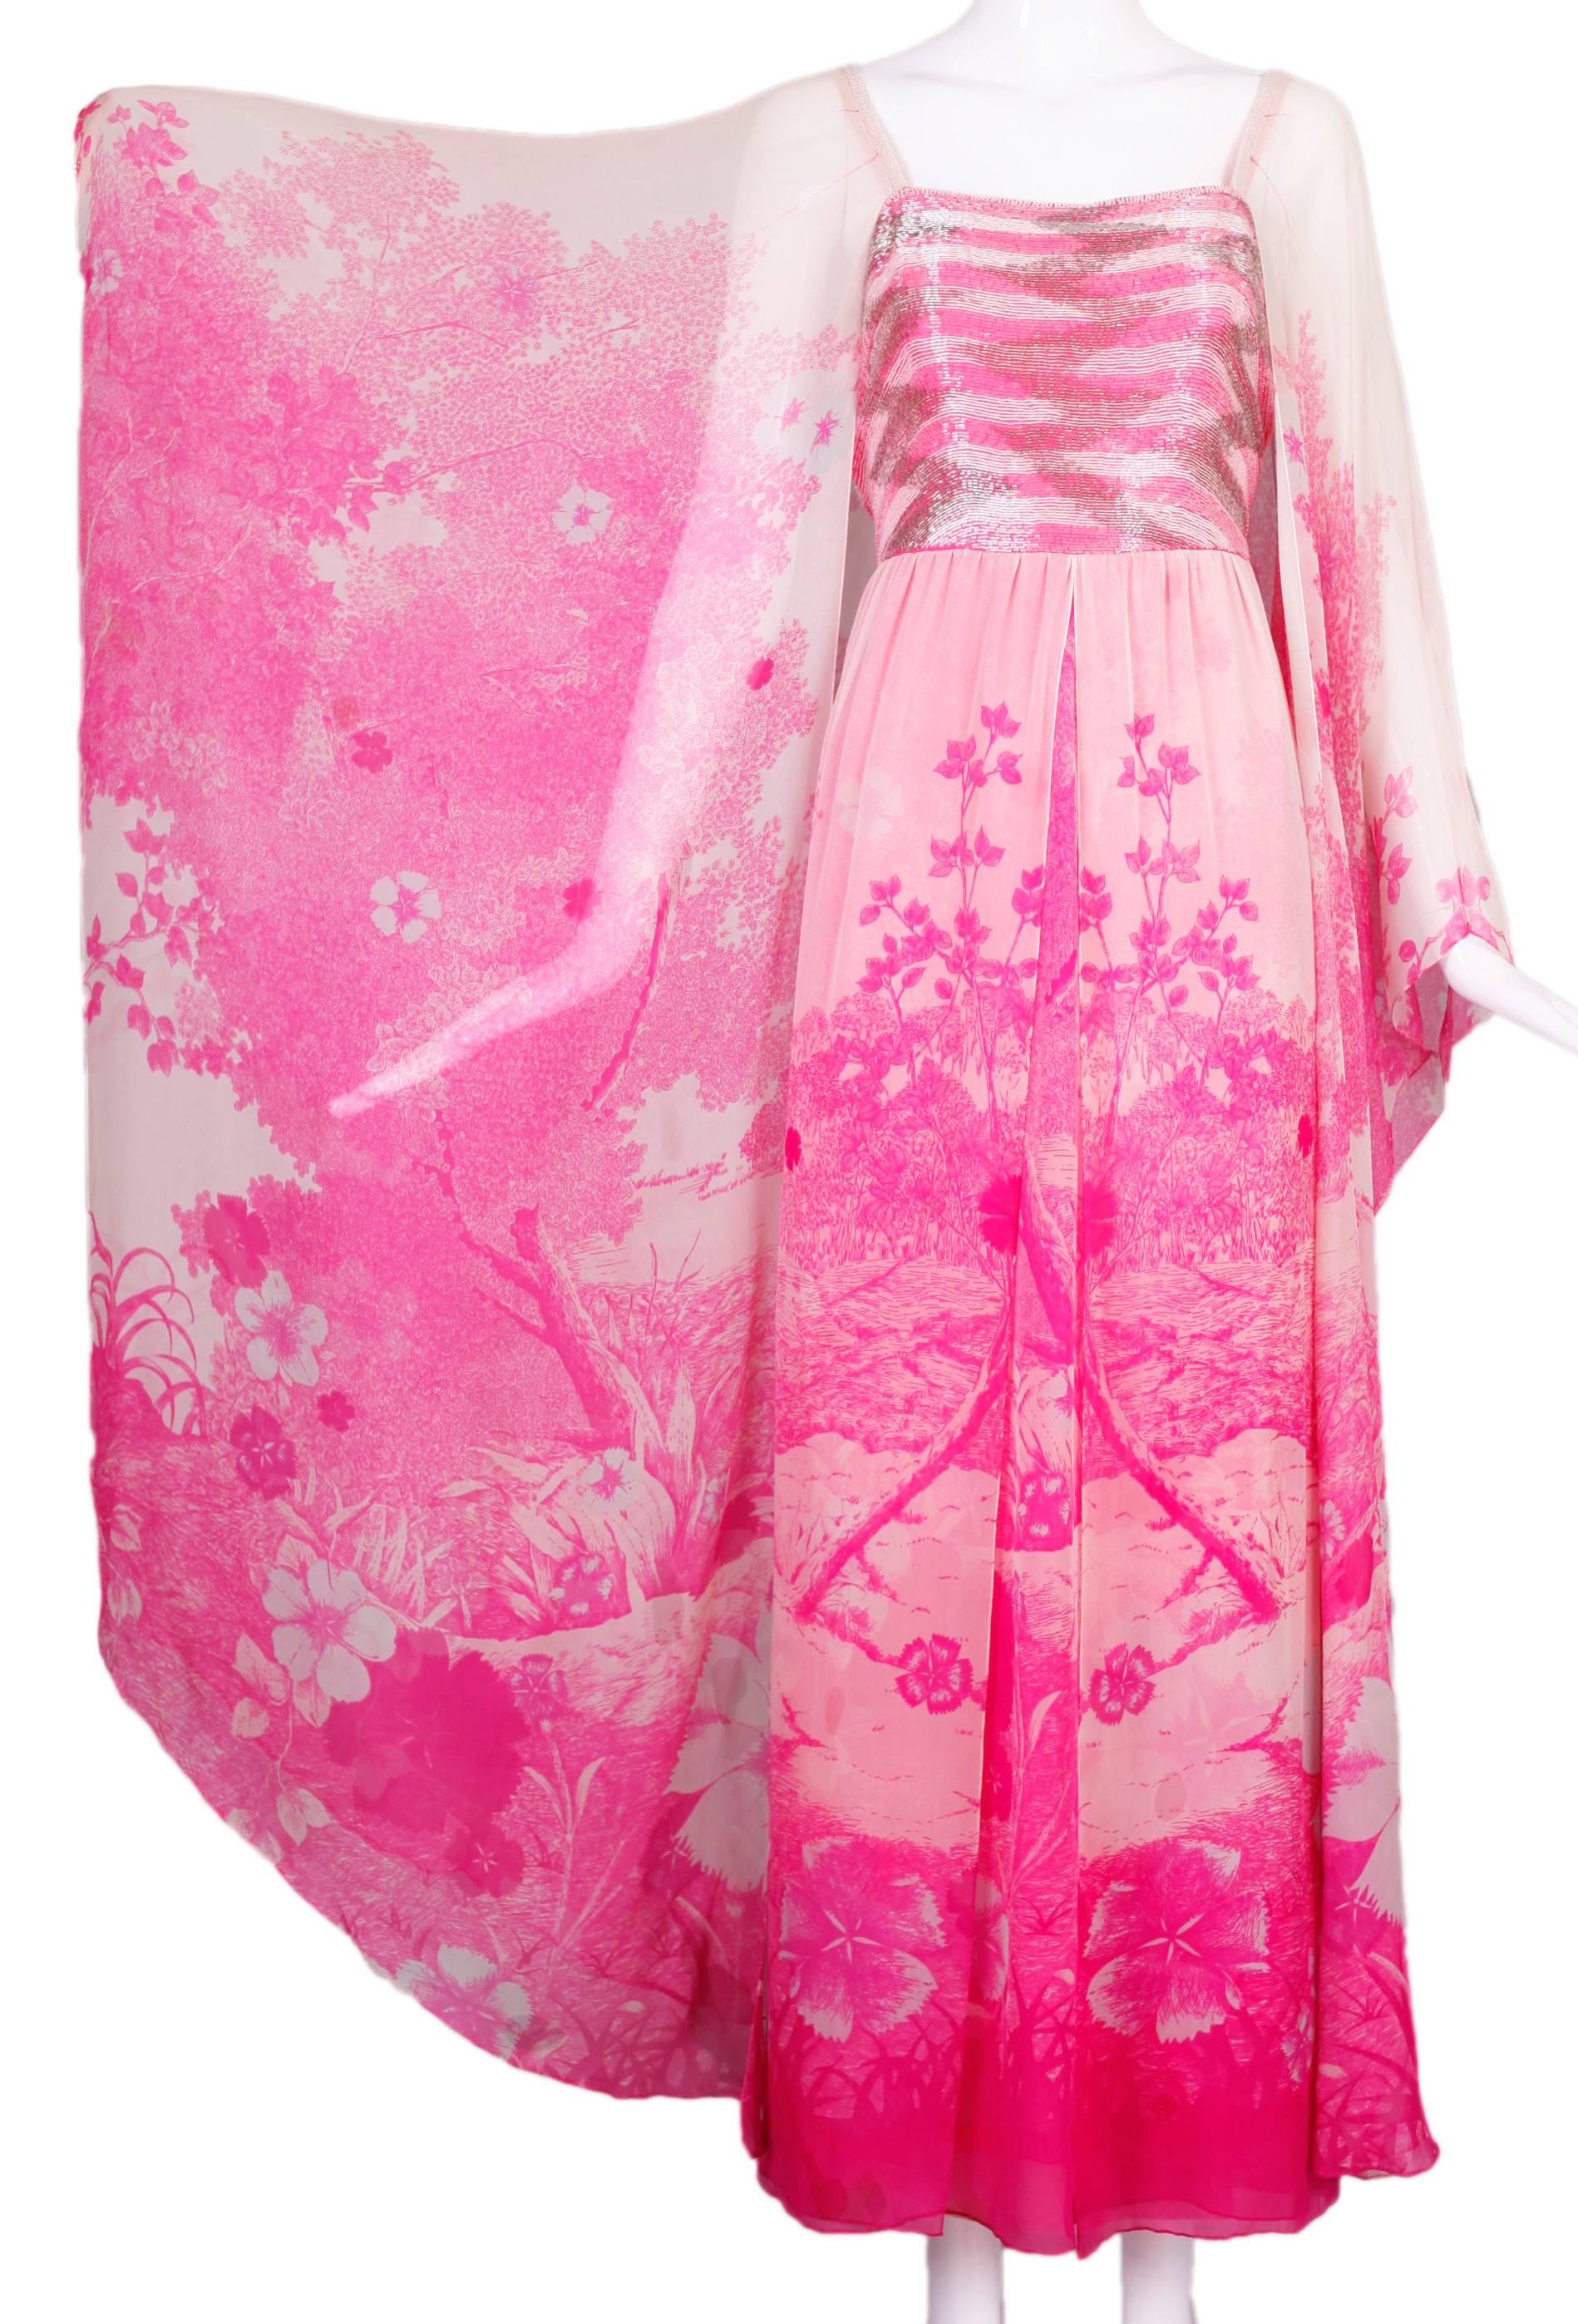 Rare 1970's beaded Hanae Mori couture pink chiffon, floral 